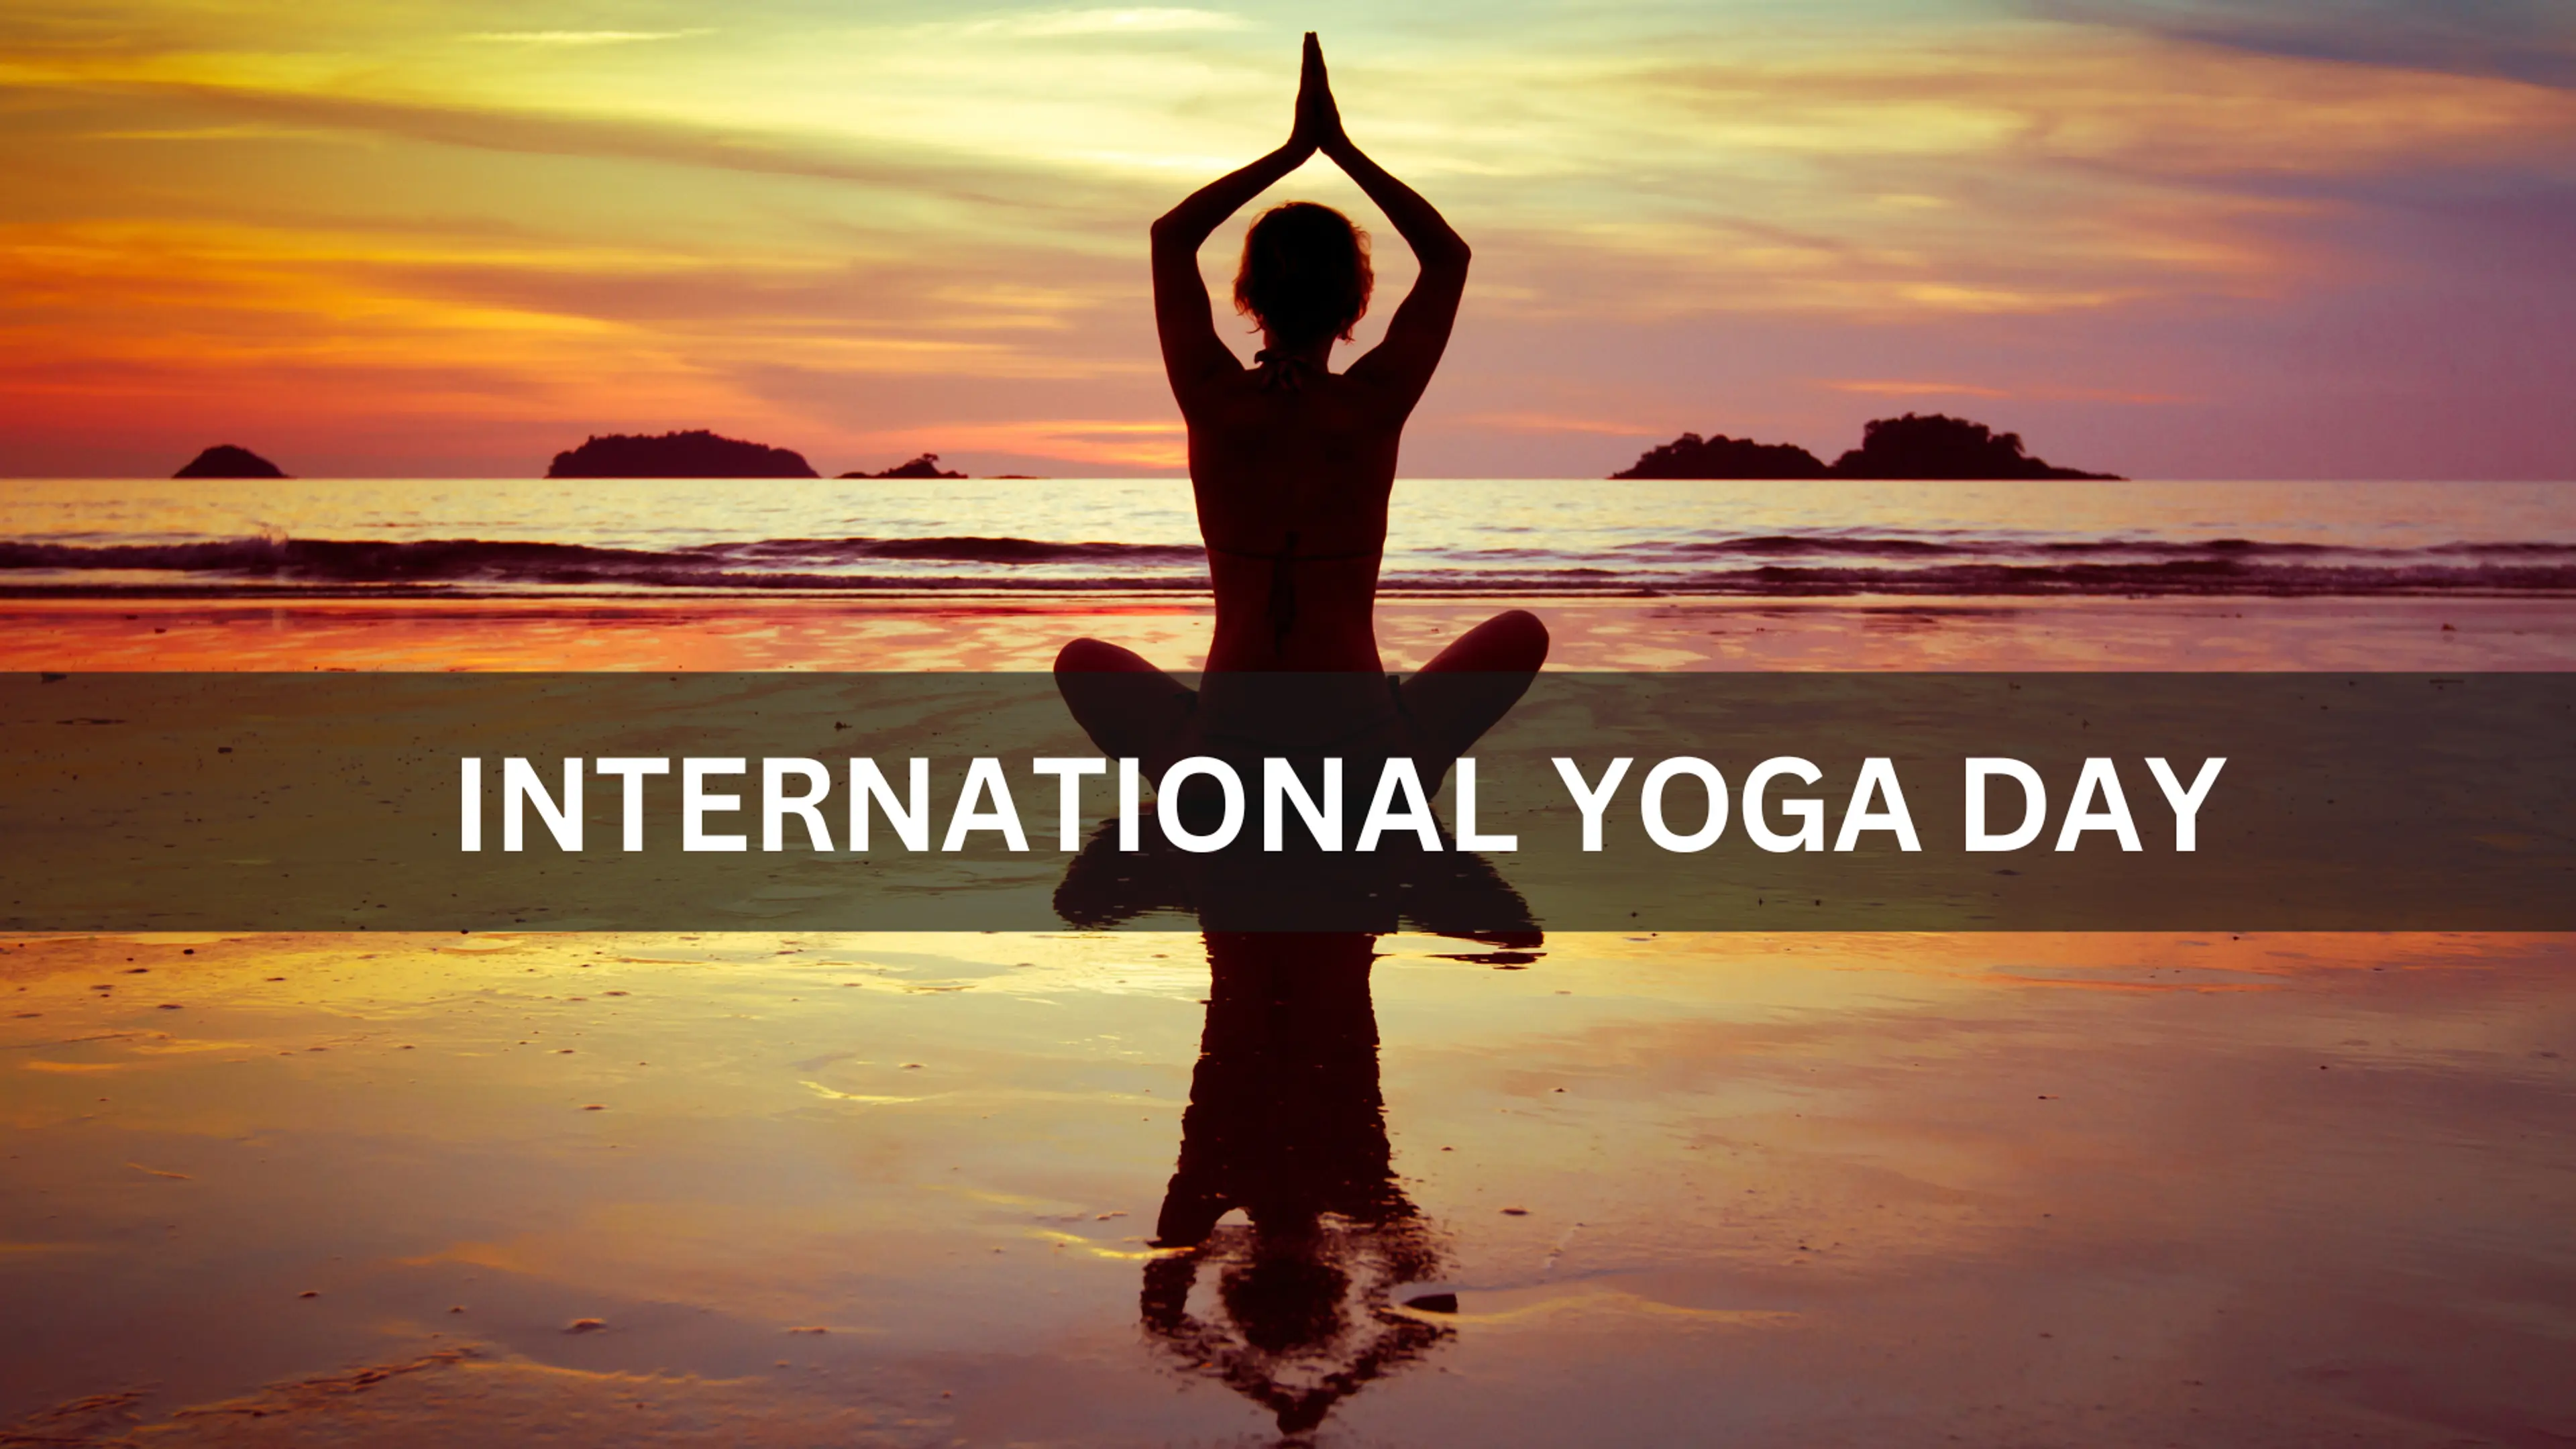 Celebrate International Yoga Day with these yoga poses